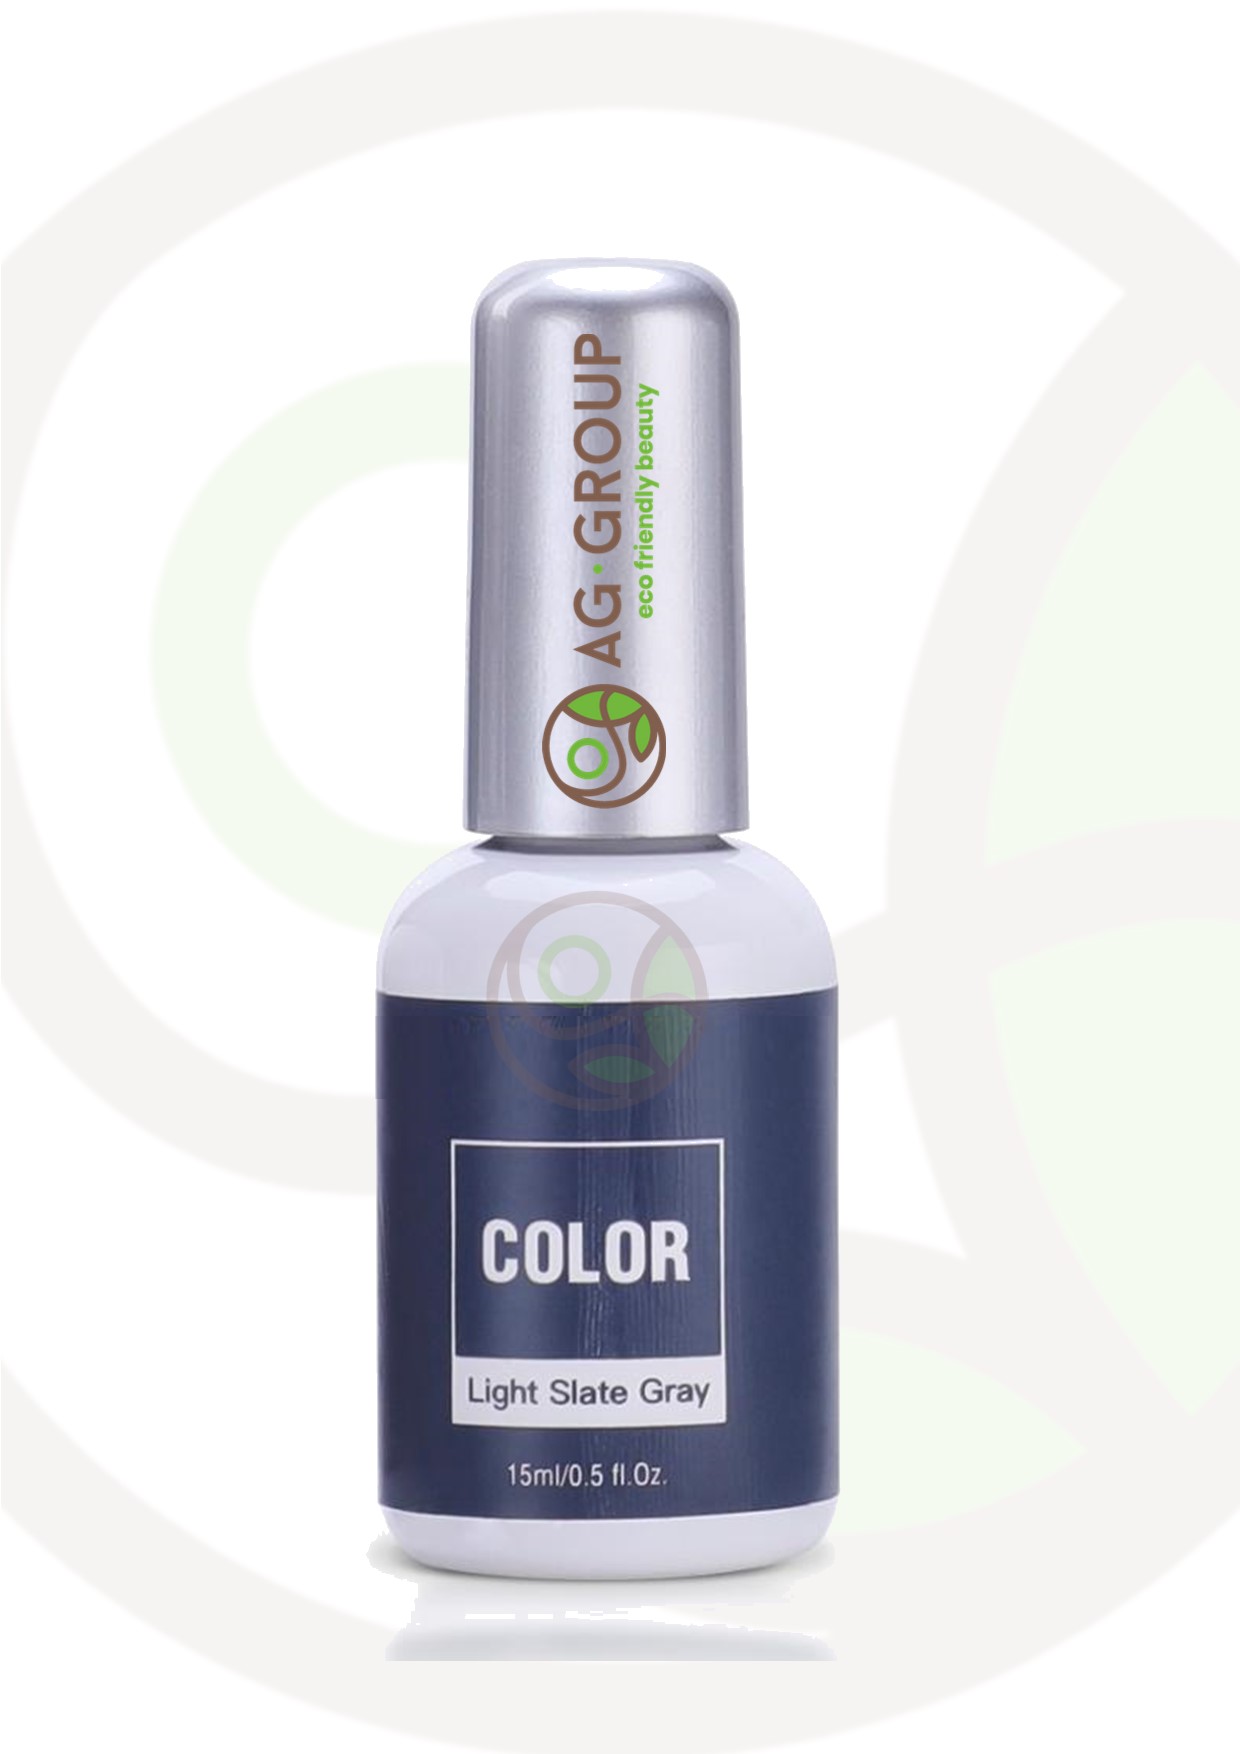 Featured image for “Gel polish soak -off led/uv- color light slate gray”